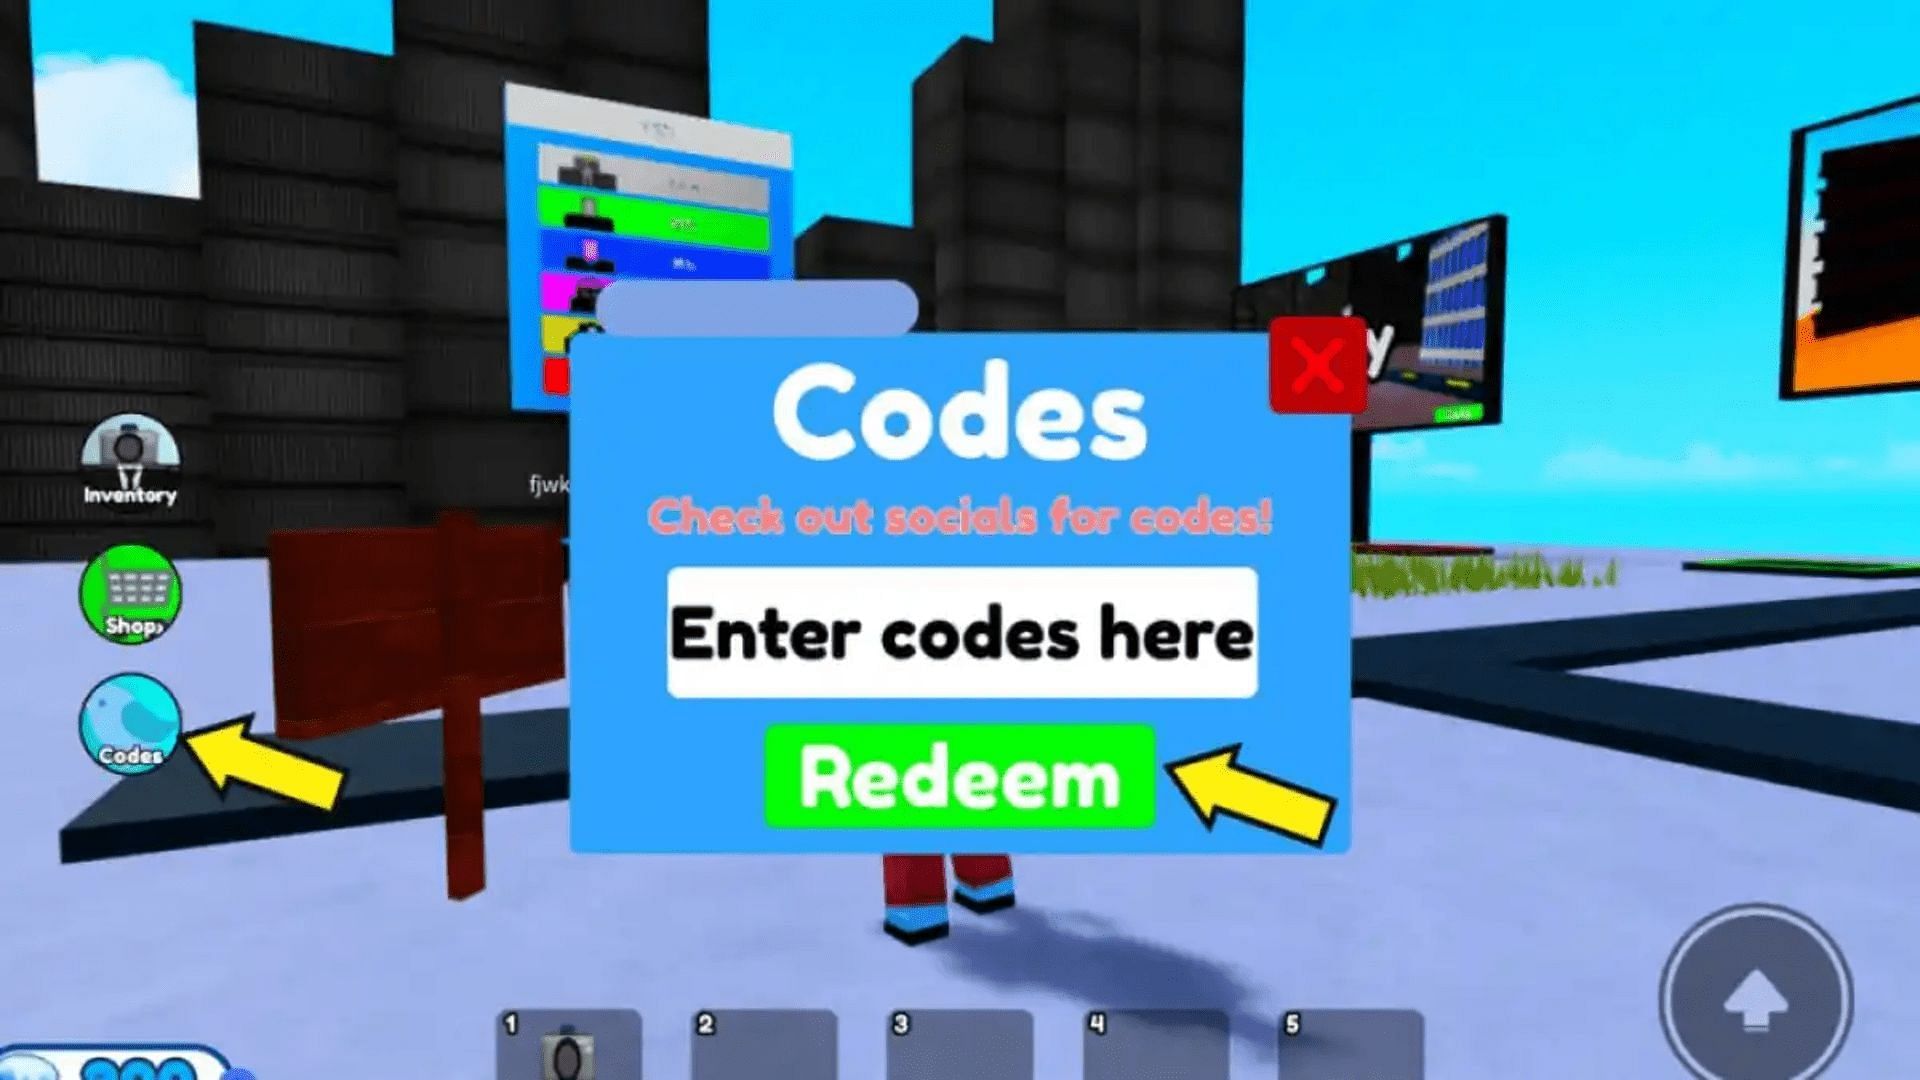 Redeem codes in Bathroom Tower Defense X easily (Image via Roblox)